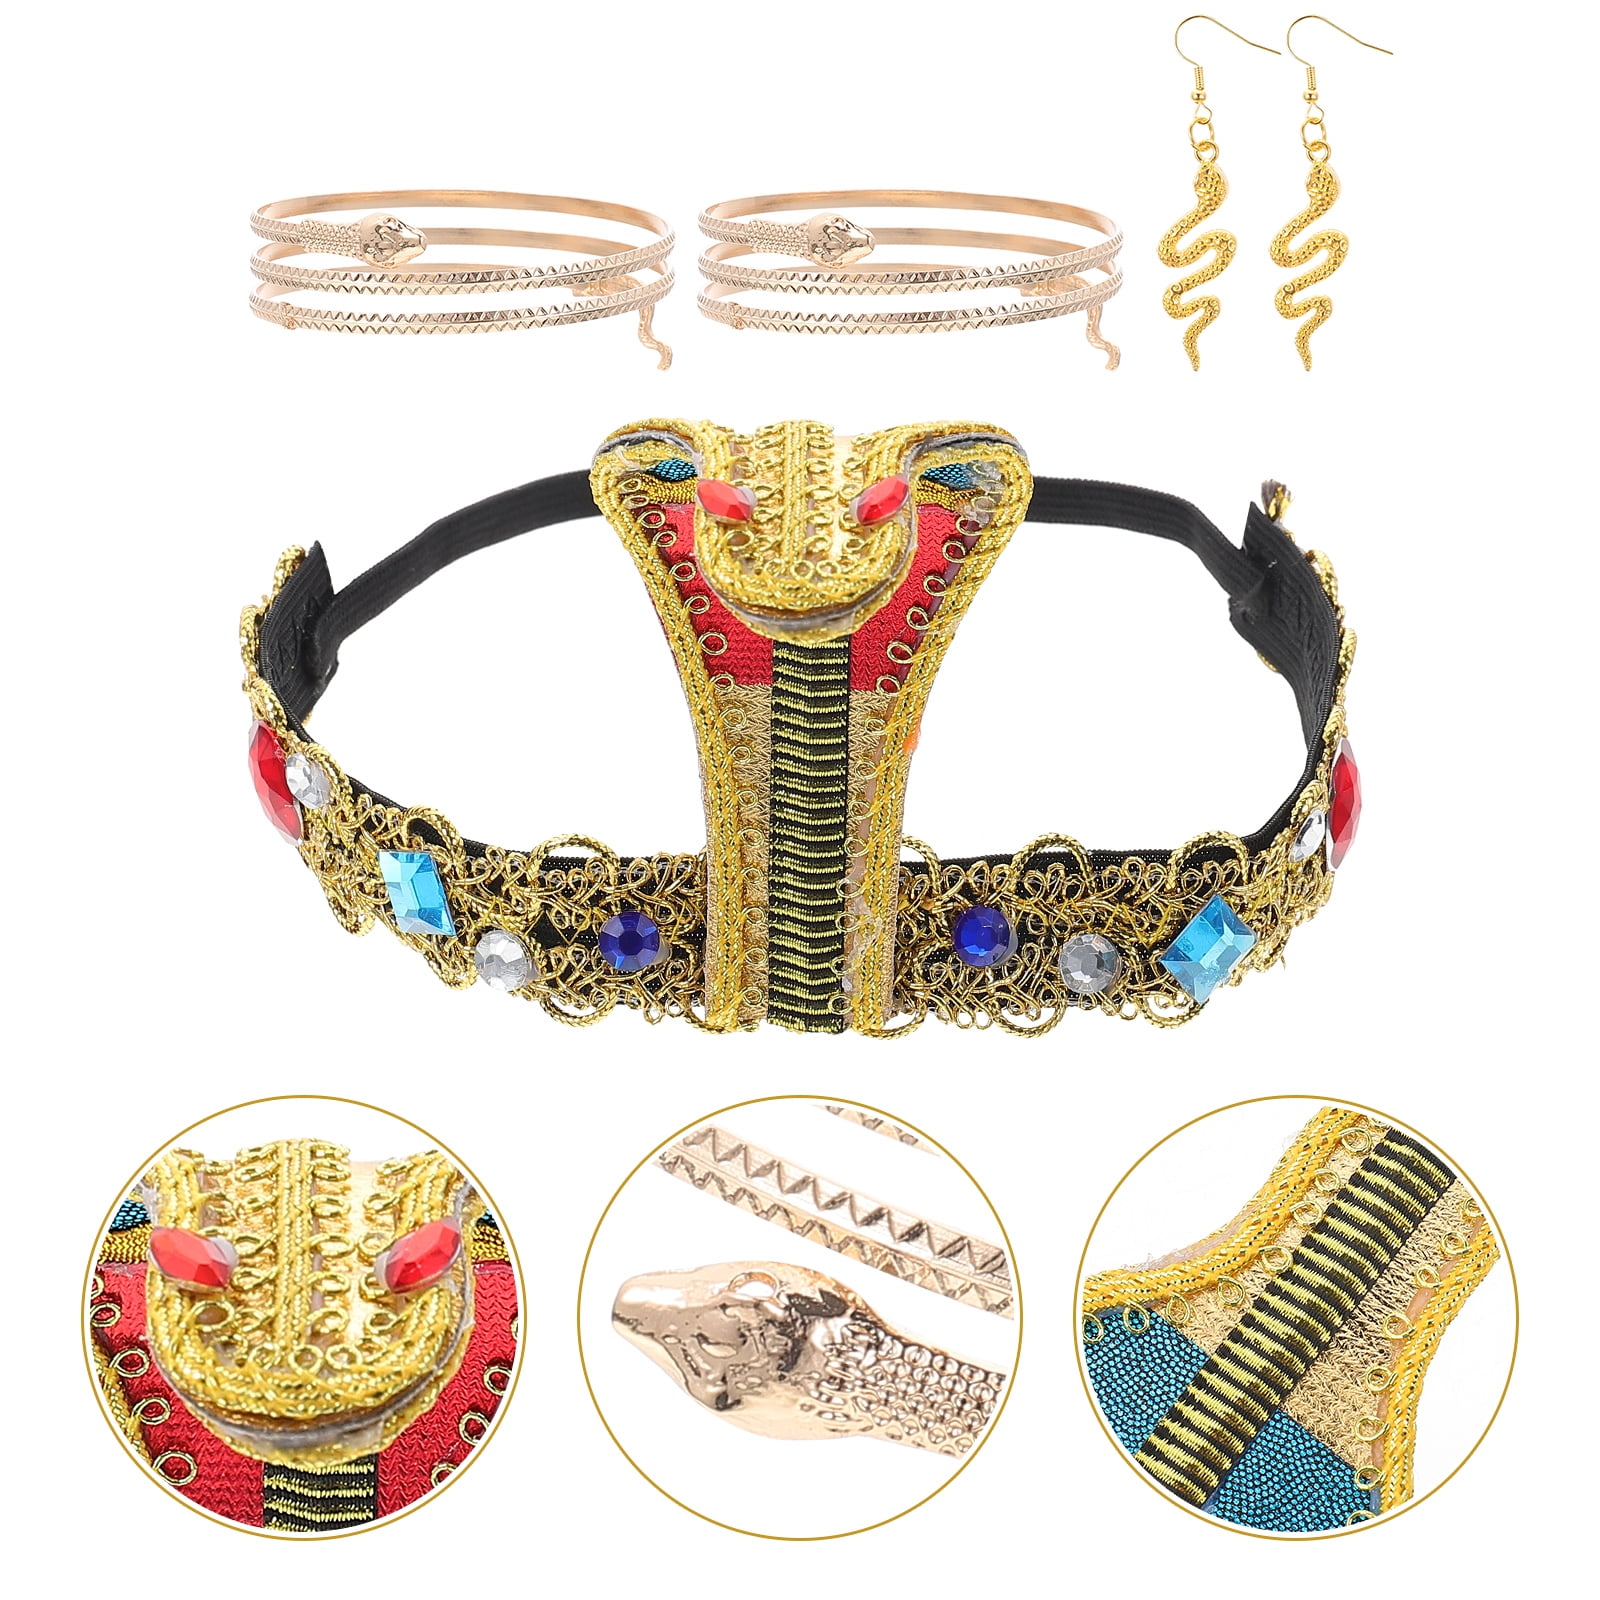 Egyptian pair Bracelet's Afghan Jewelry | eBay